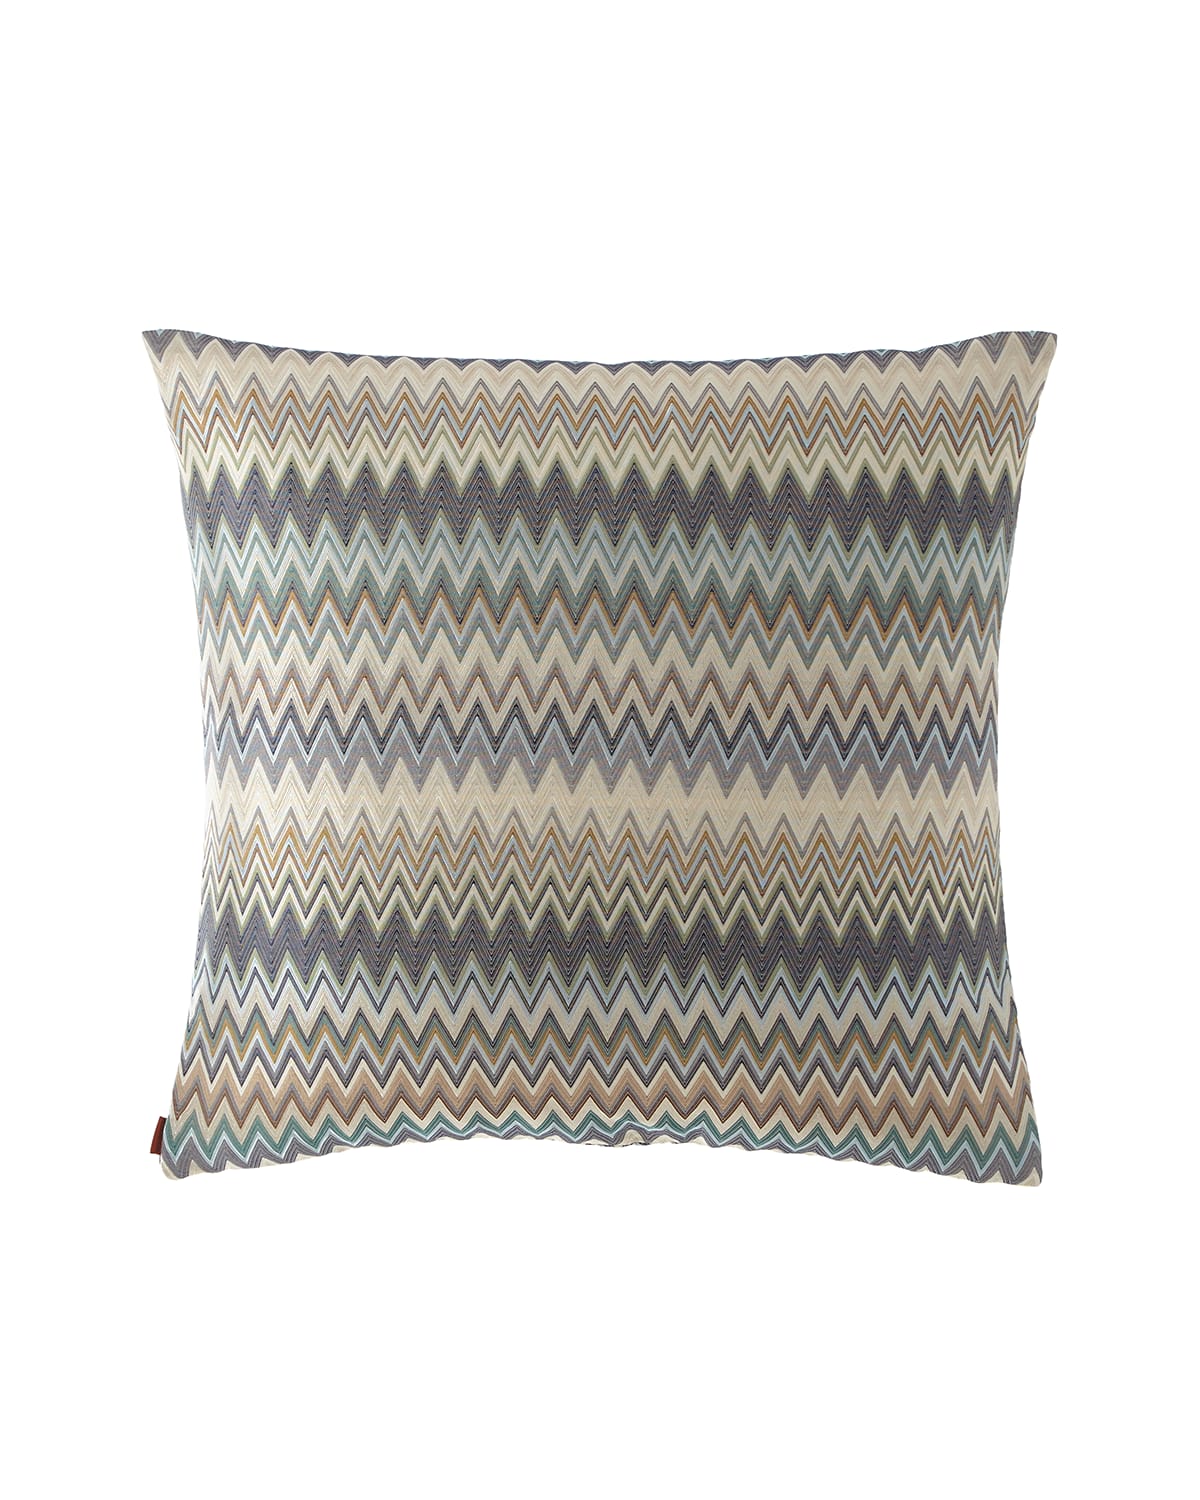 Image Missoni Home Masuleh Zigzag Decorative Pillow, 23"